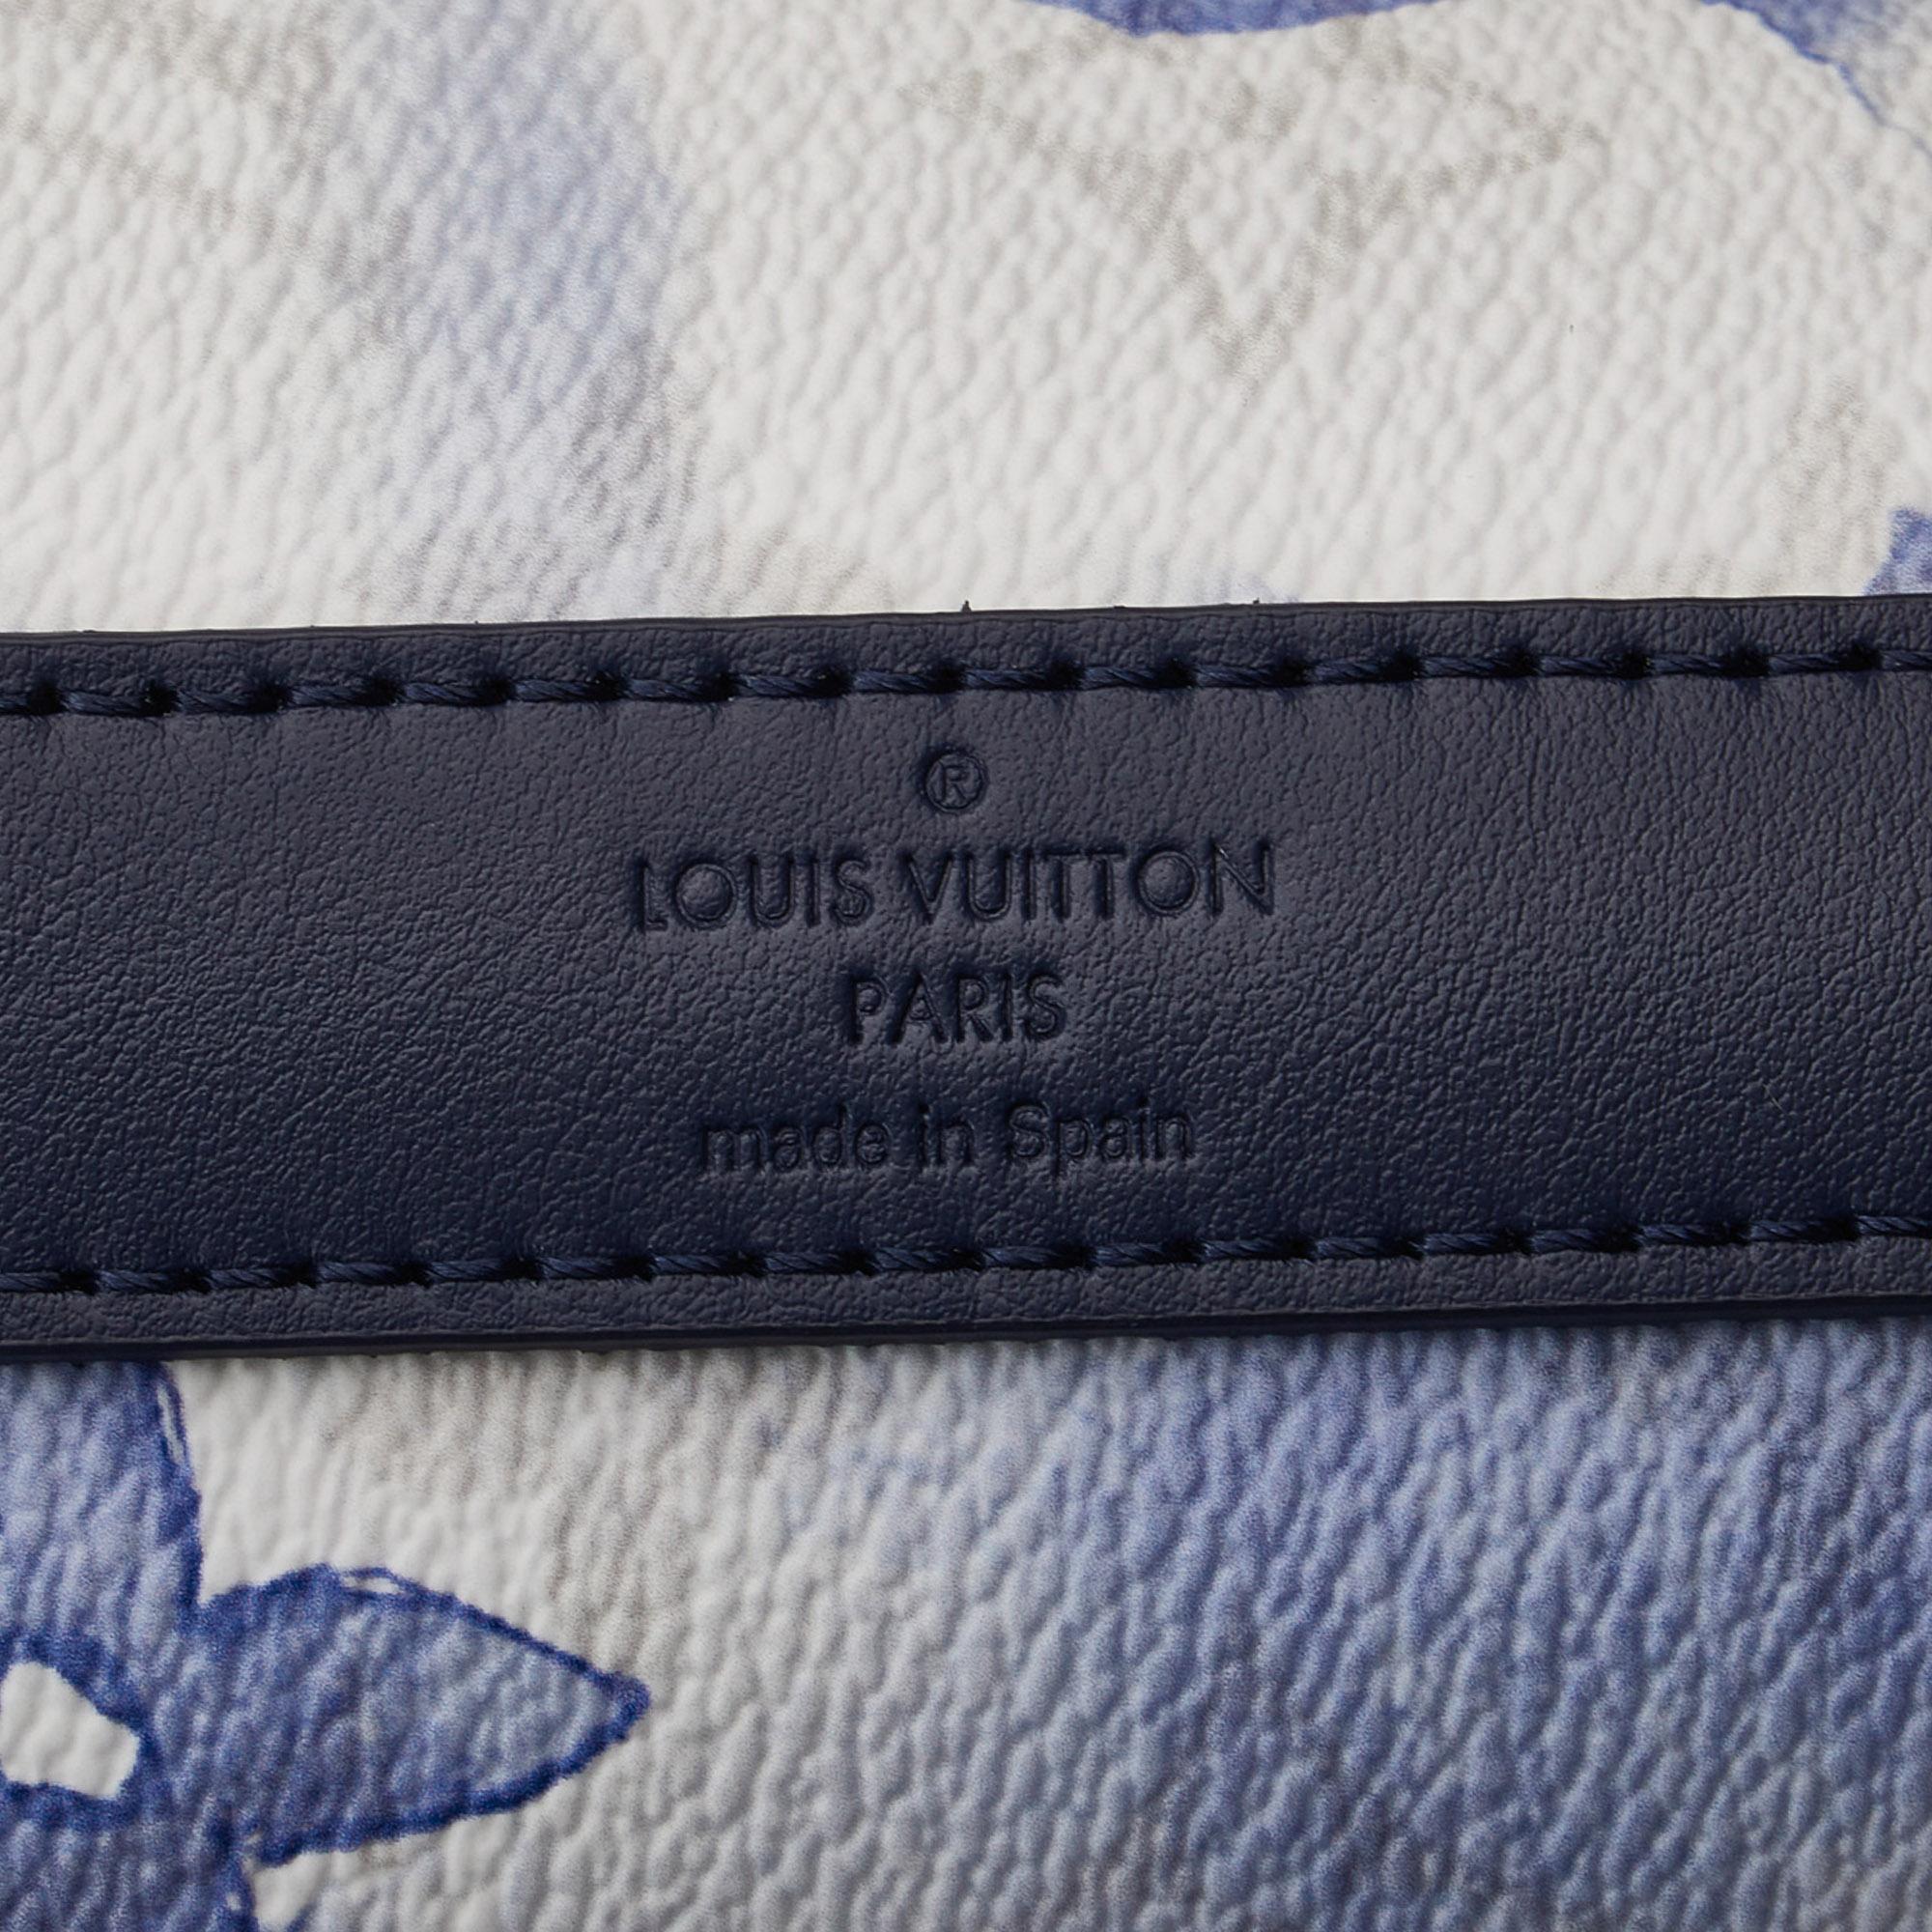 Louis Vuitton Blue/White Monogram Watercolor Weekend Tote PM